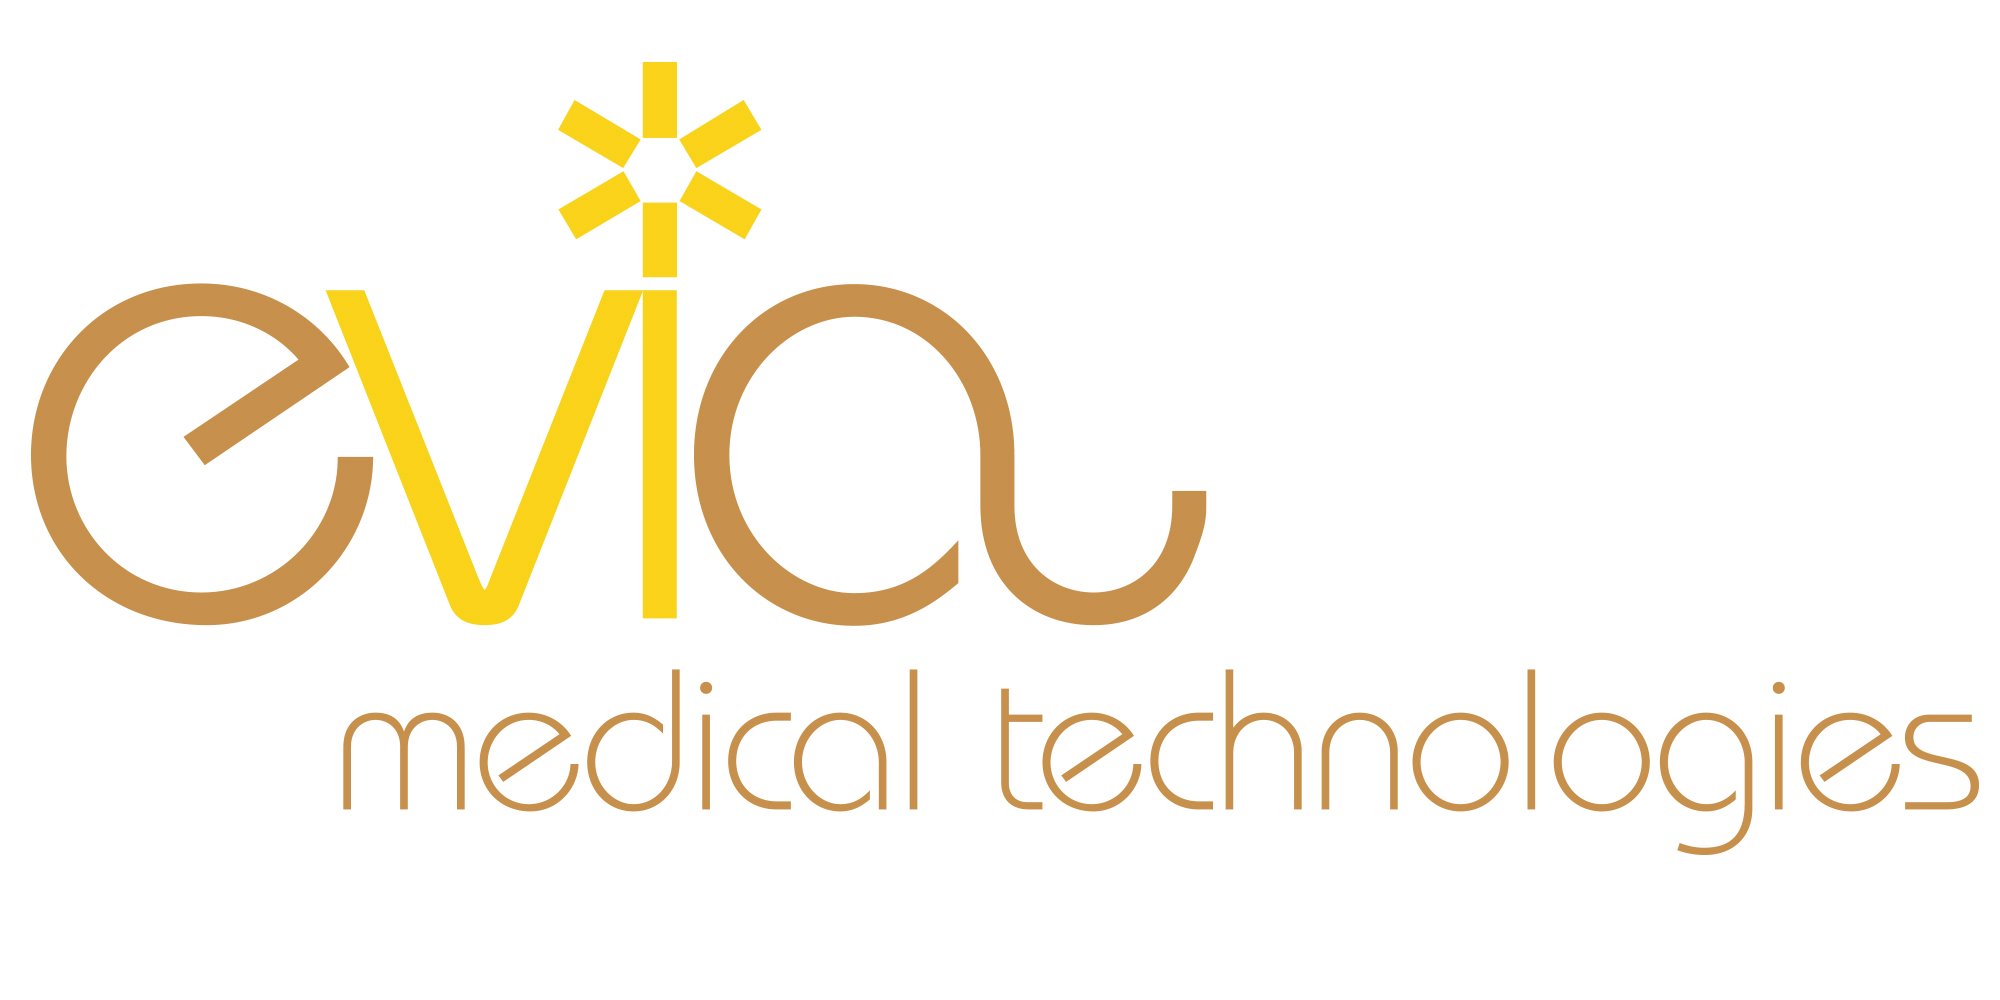 Evia Medical Technologies